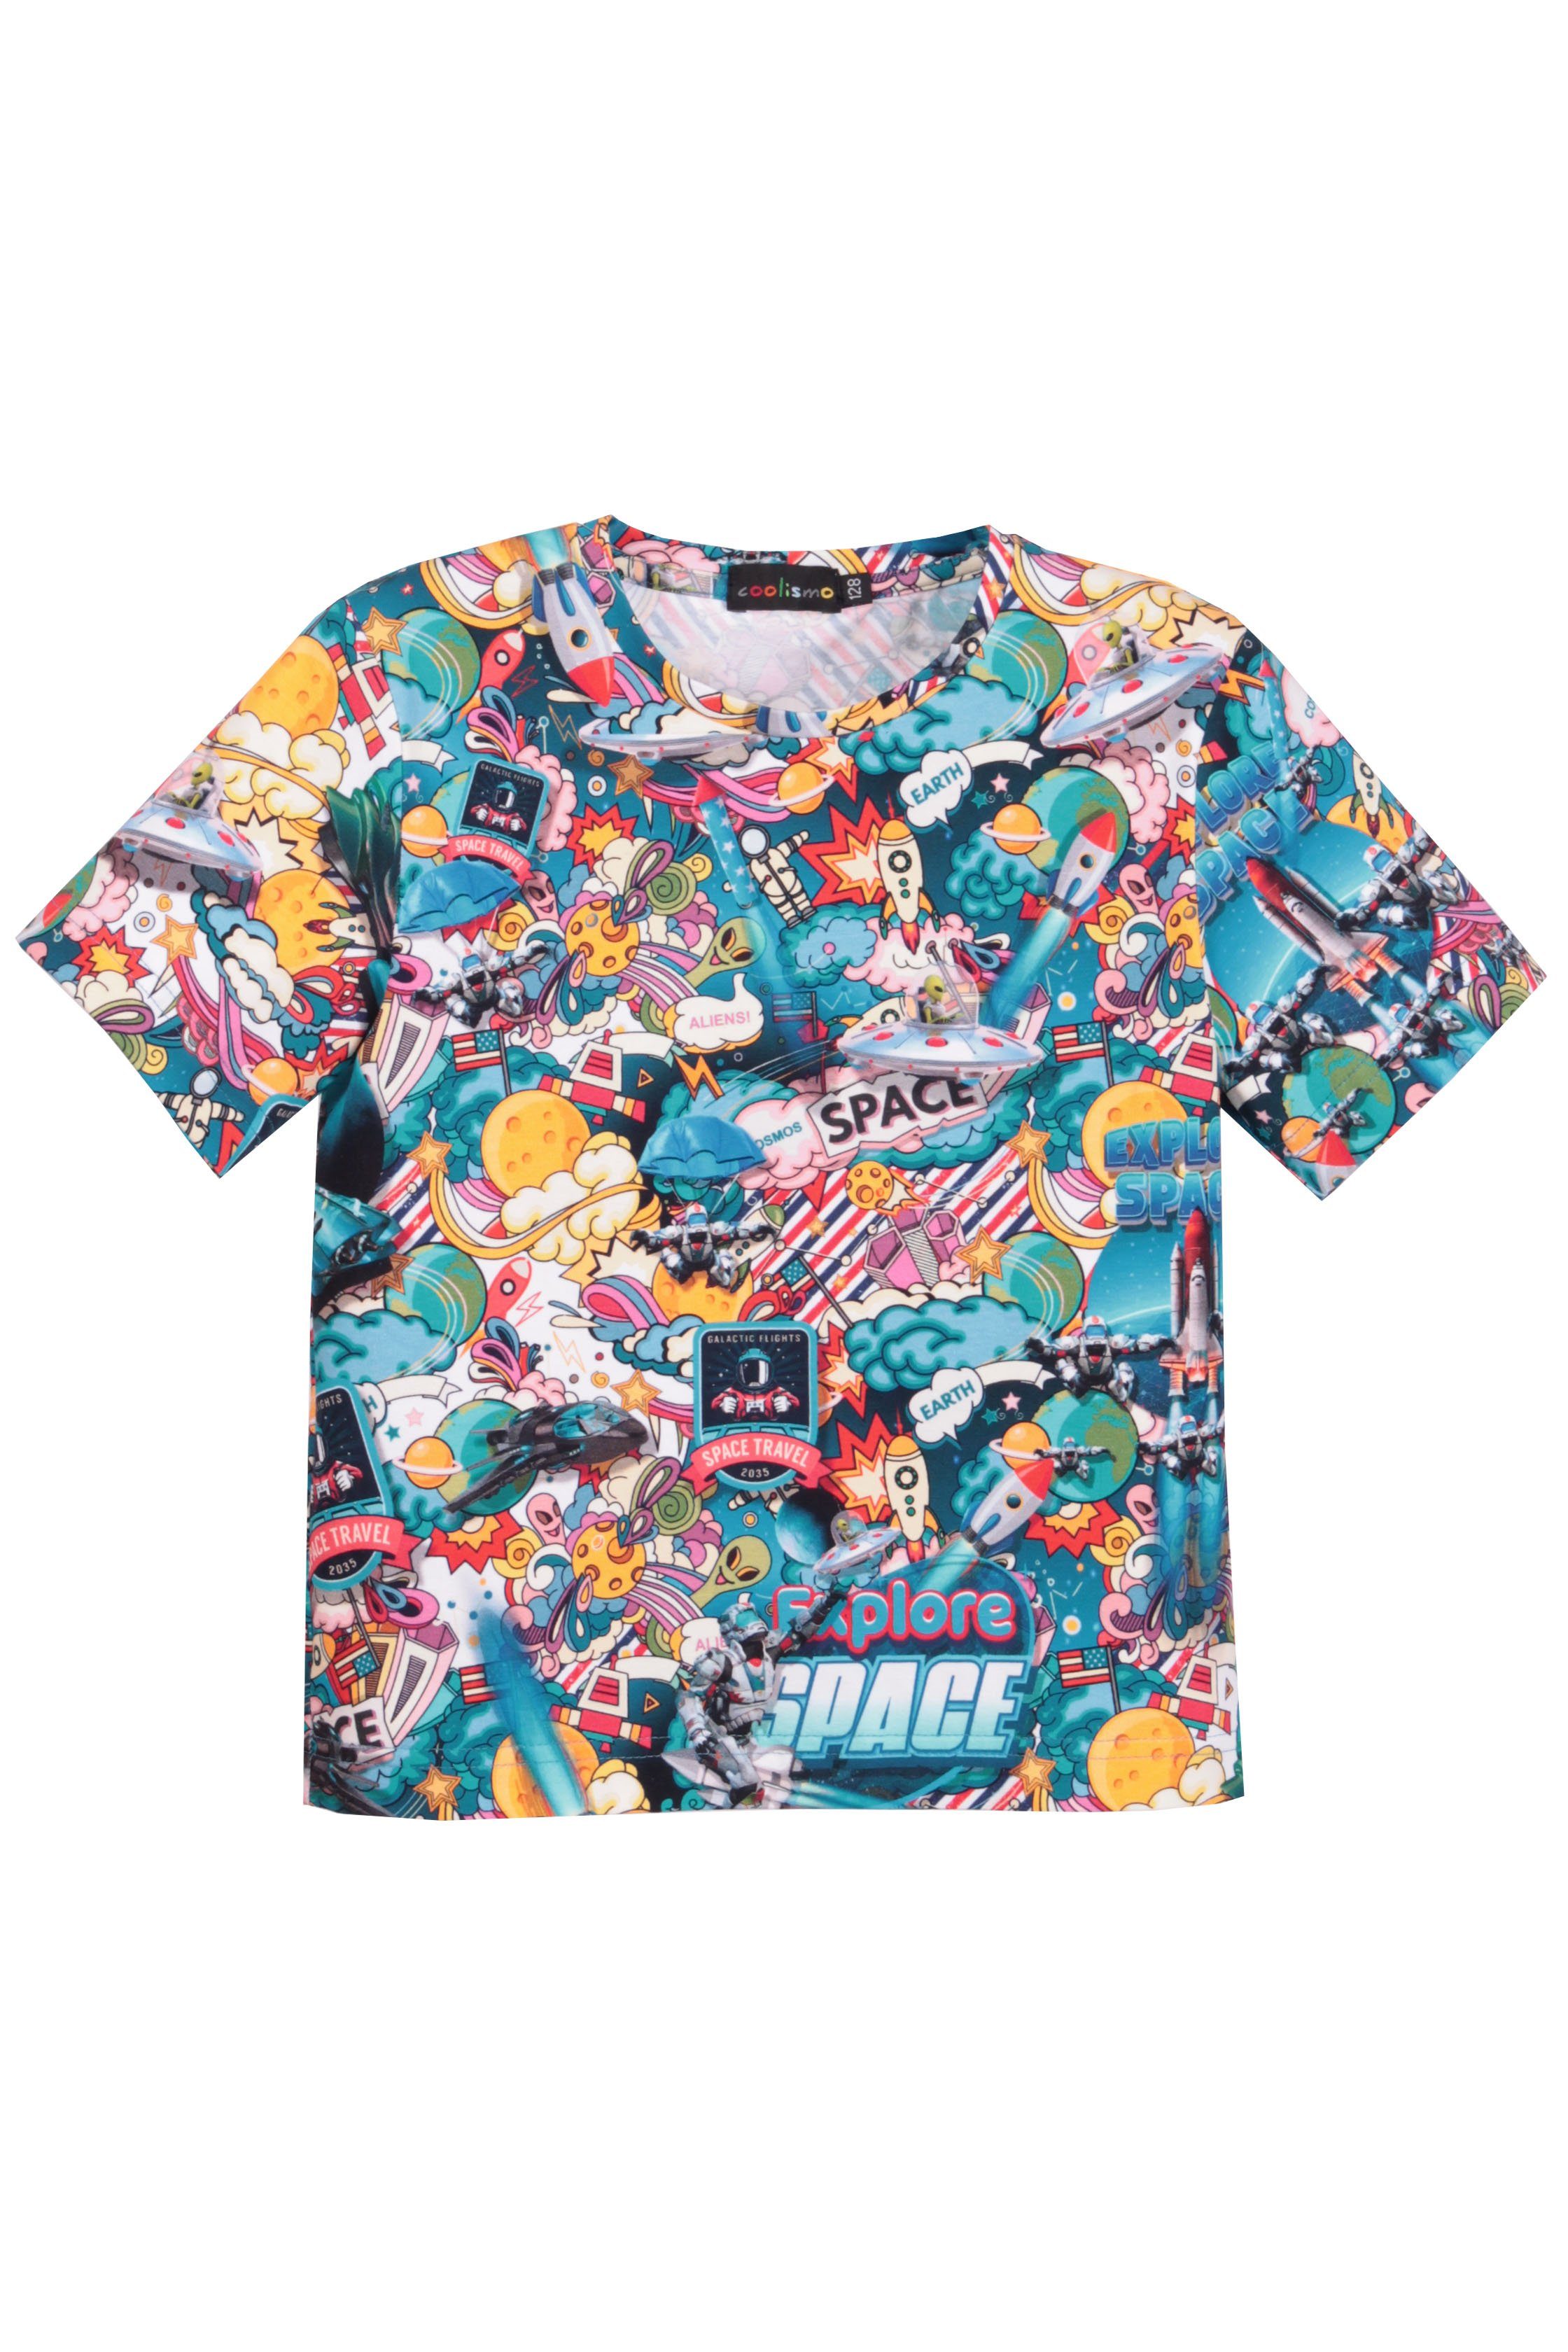 Rundhalsauschnitt, Comic-Raketen-Motiv coolismo mit für T-Shirt Alloverprint, Print-Shirt Jungen Baumwolle